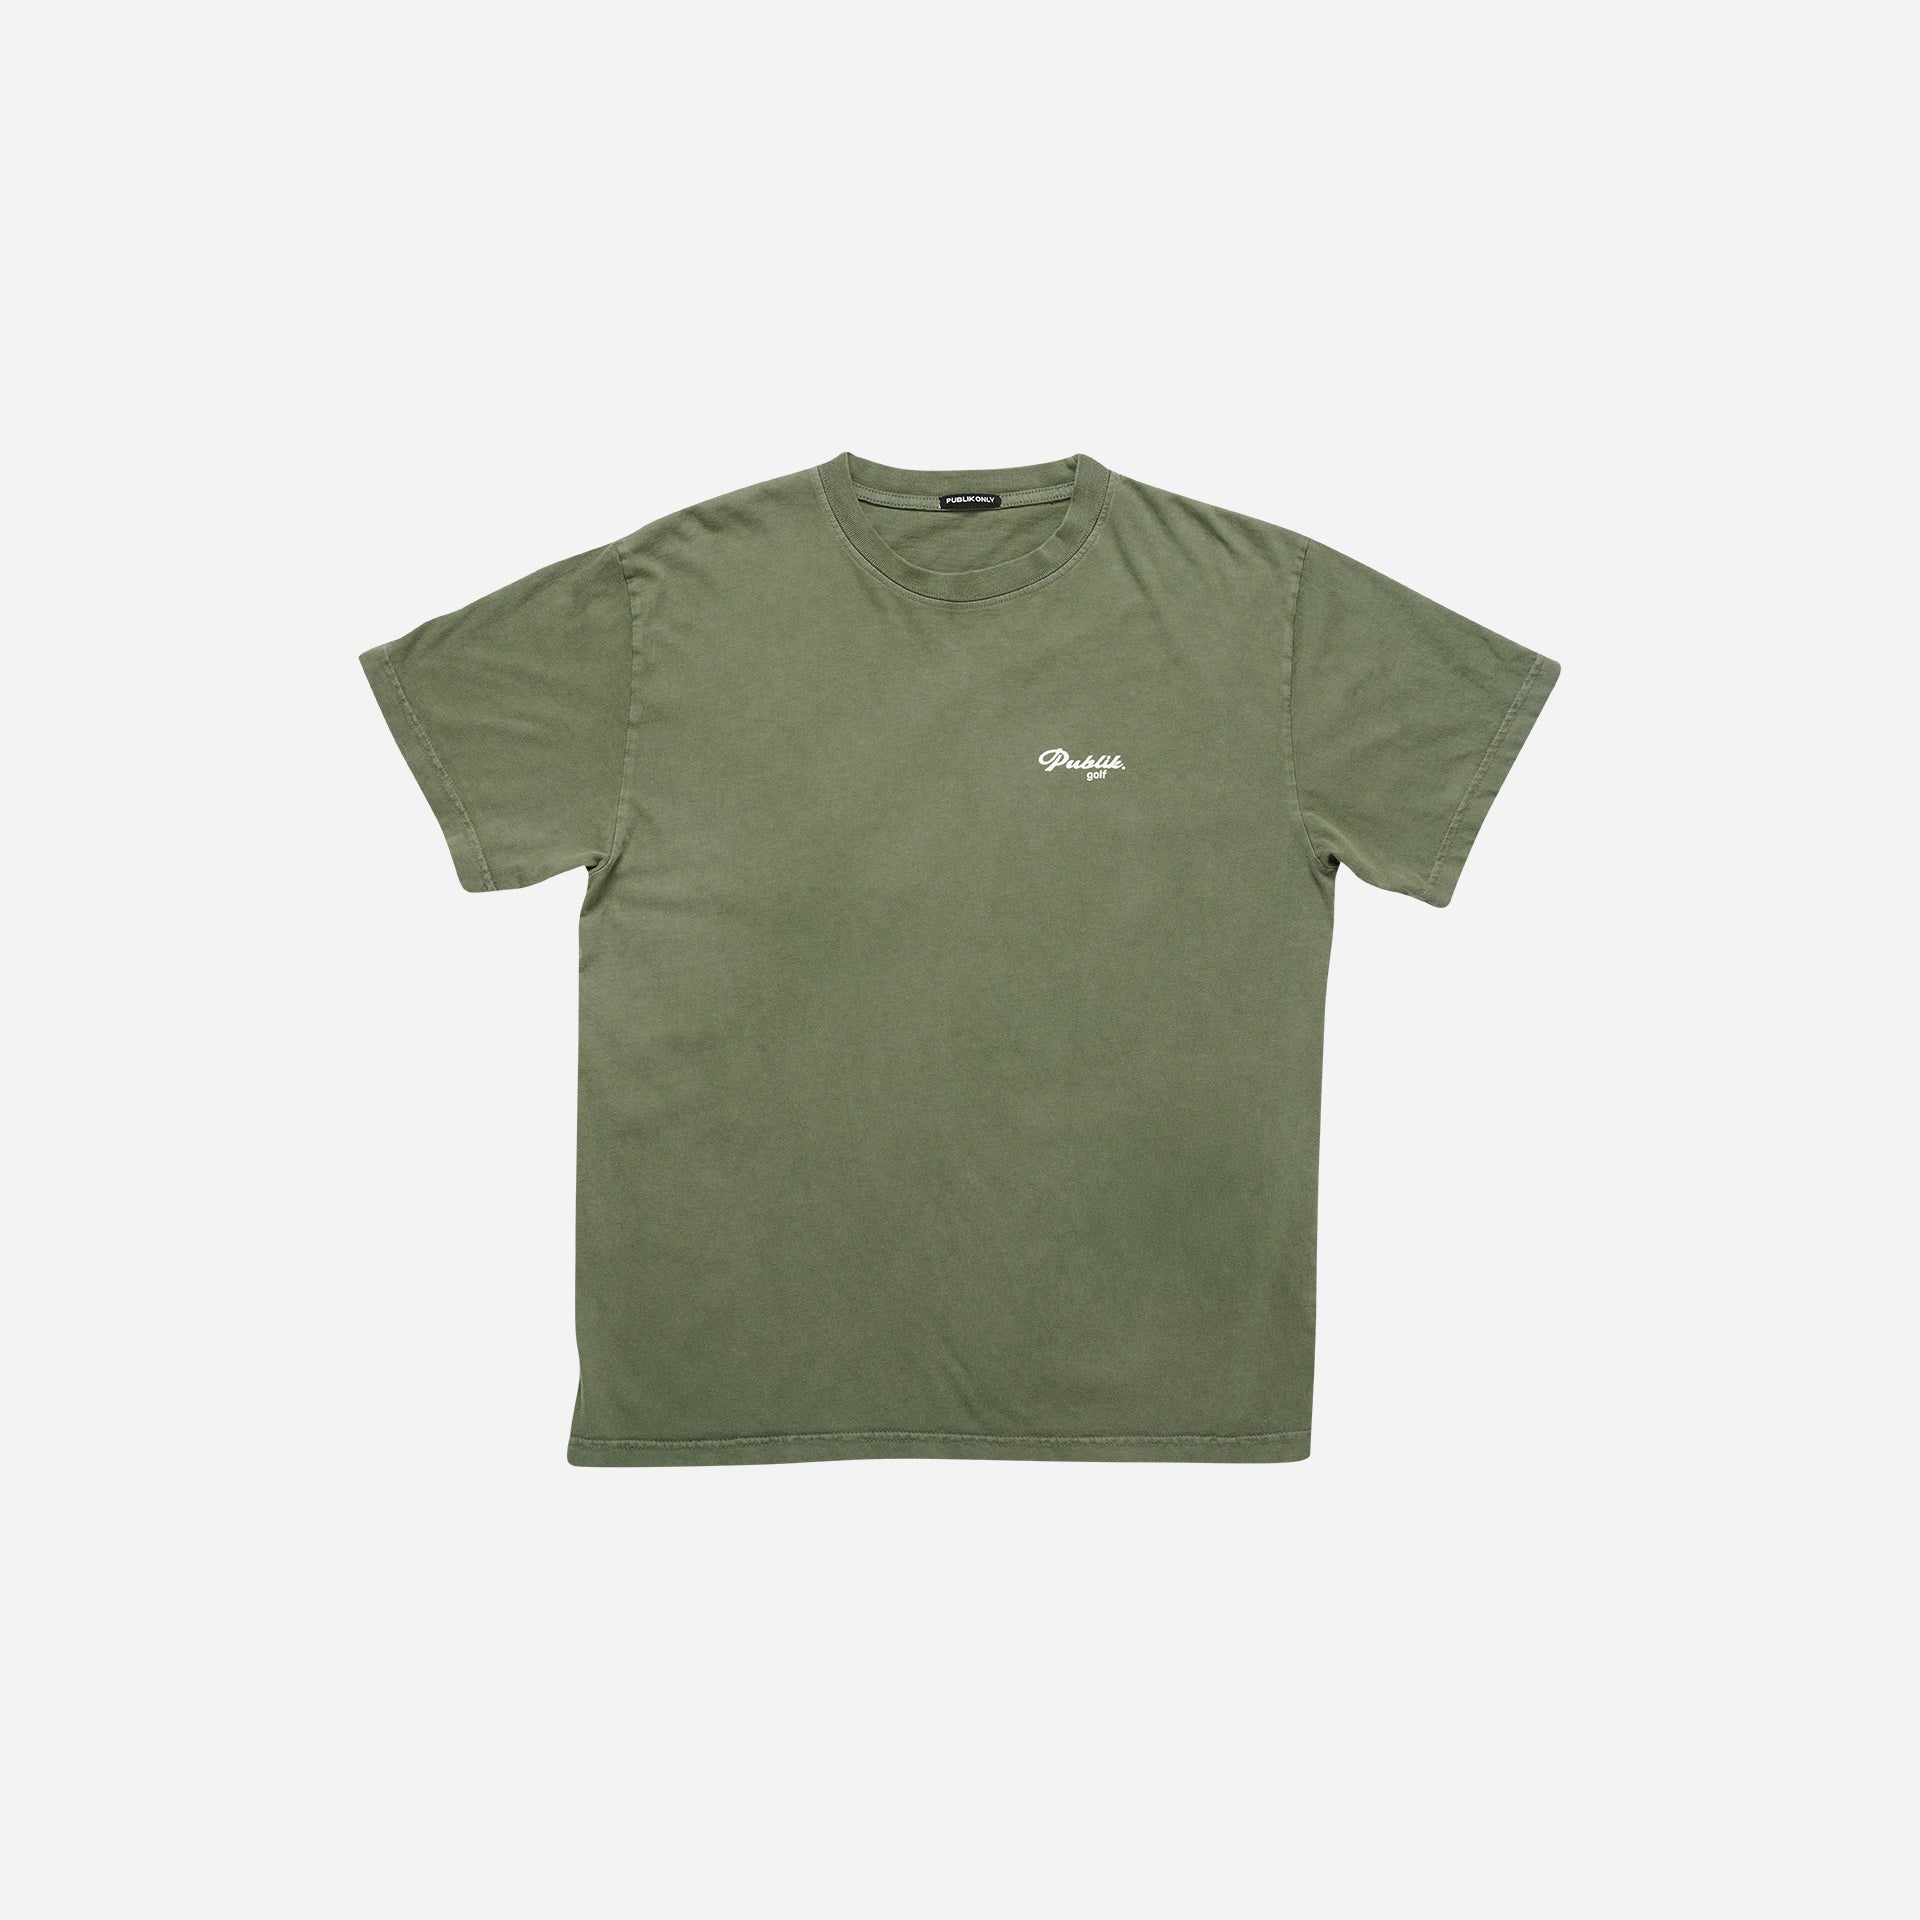 Publik Golf Graphic T-Shirt Green